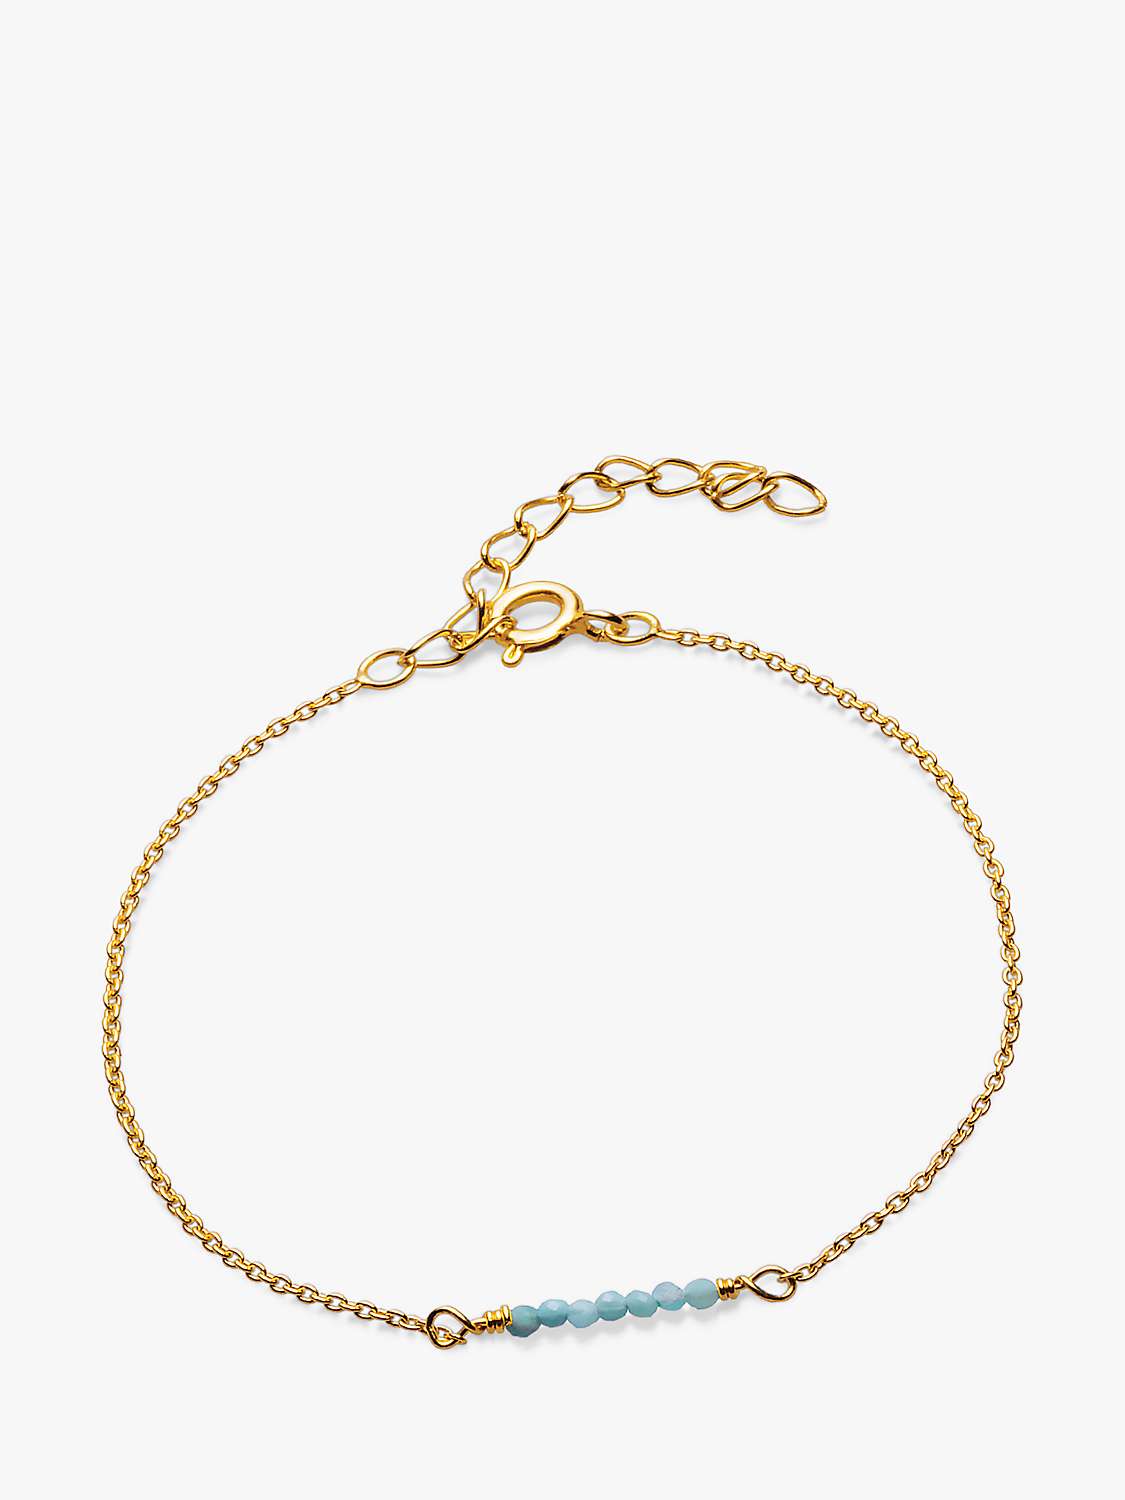 Buy Sarah Alexander Aqua Shores Gemstone Bracelet, Gold Online at johnlewis.com